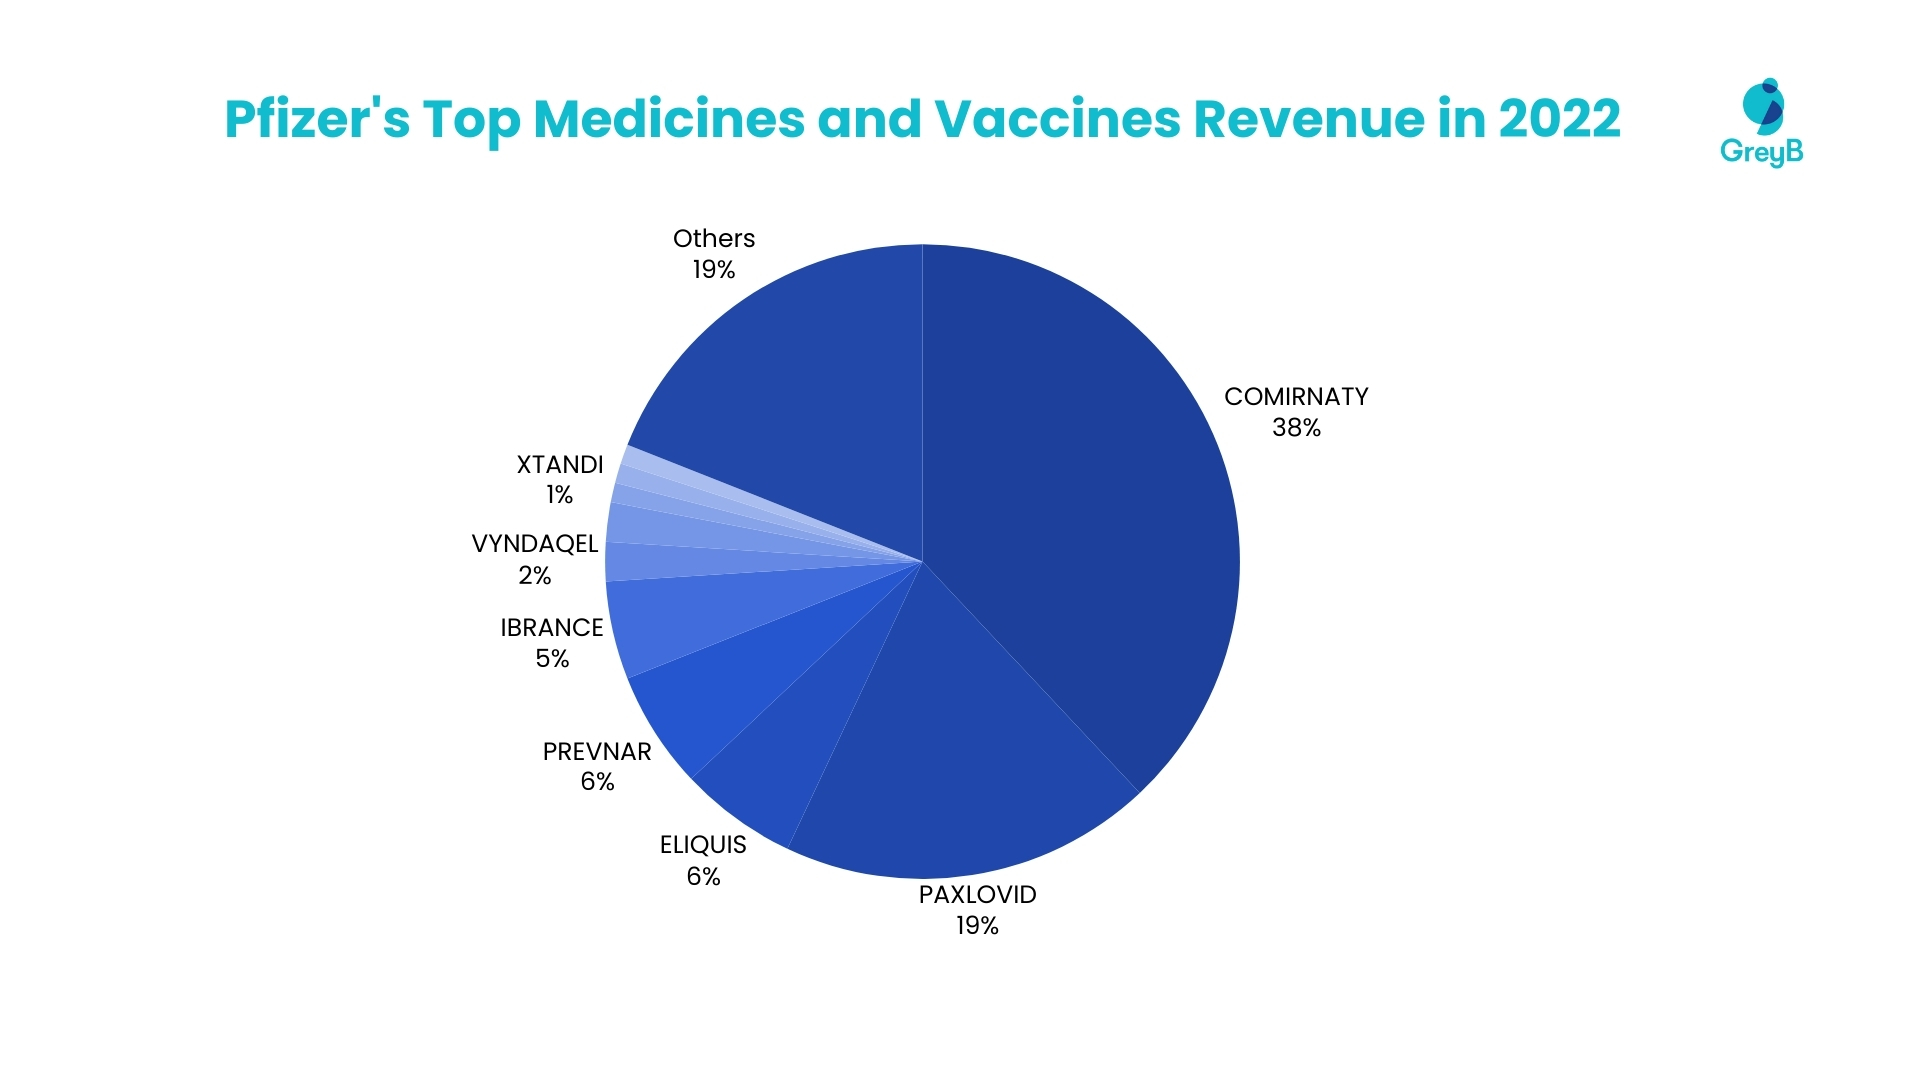 Pfizer's Top Medicines and Vaccines Revenue in 2022